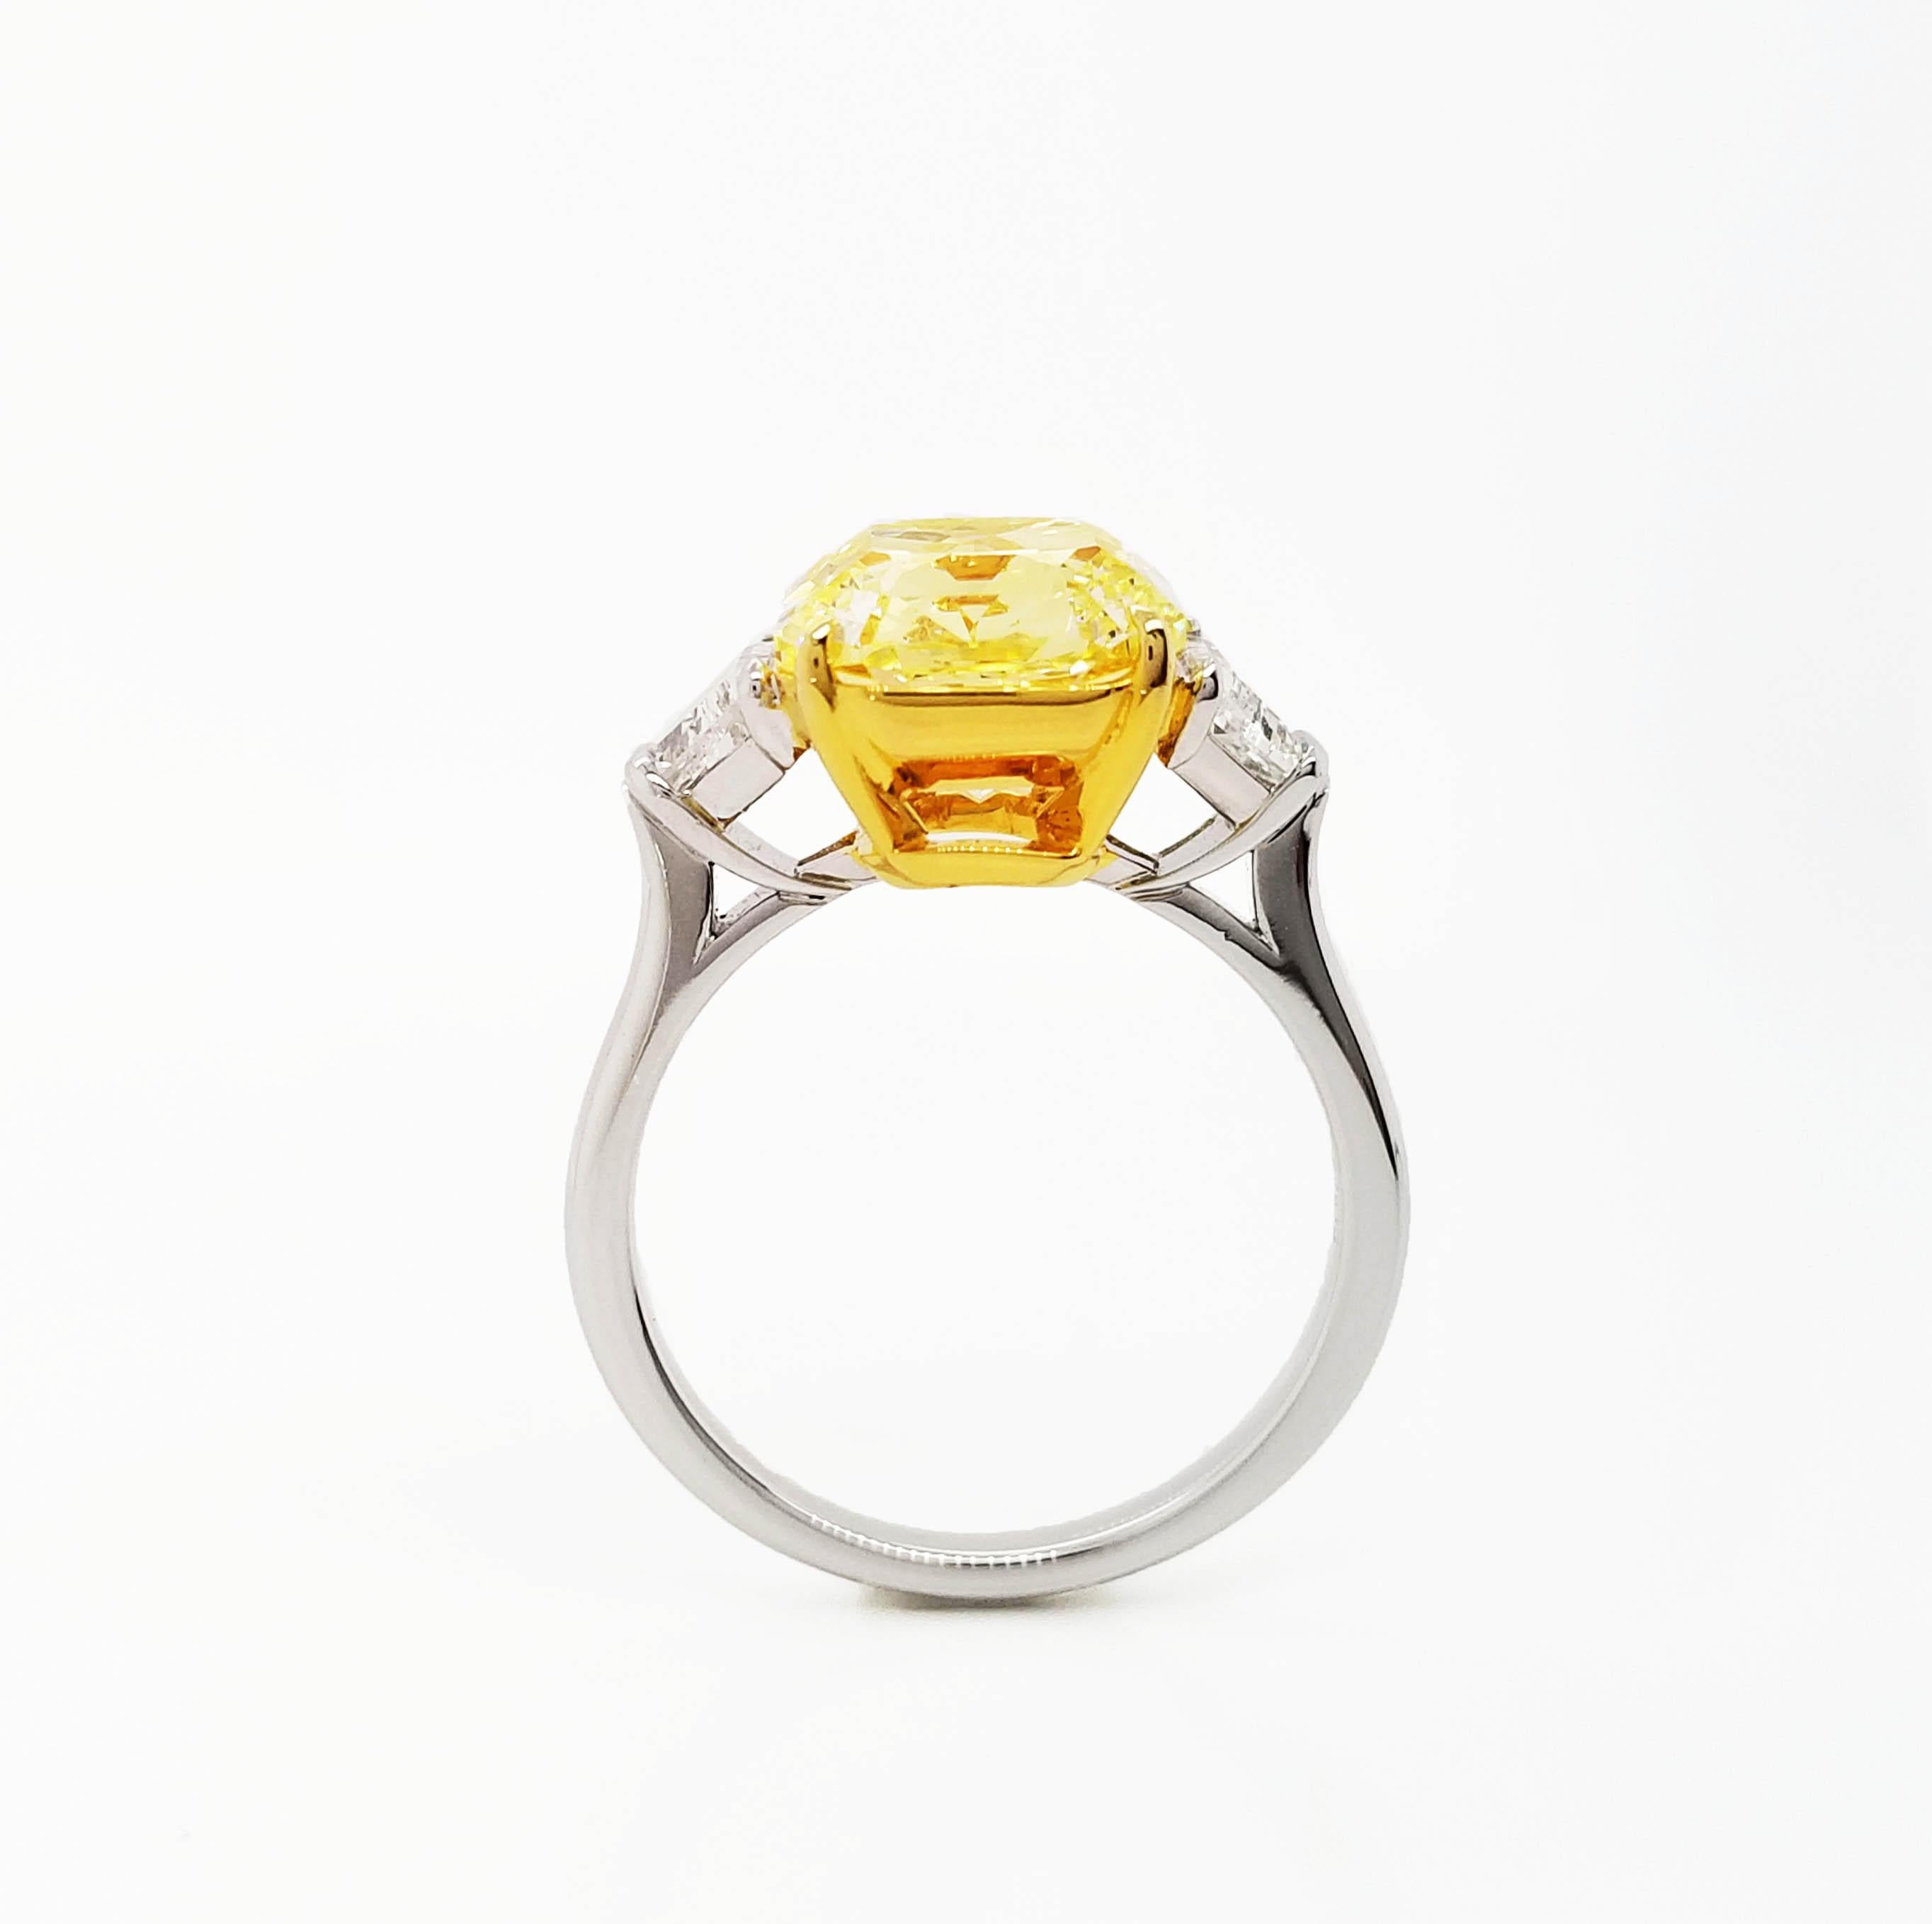 Contemporary Scarselli 5 Carat Fancy Intense Yellow Diamond Ring in Platinum